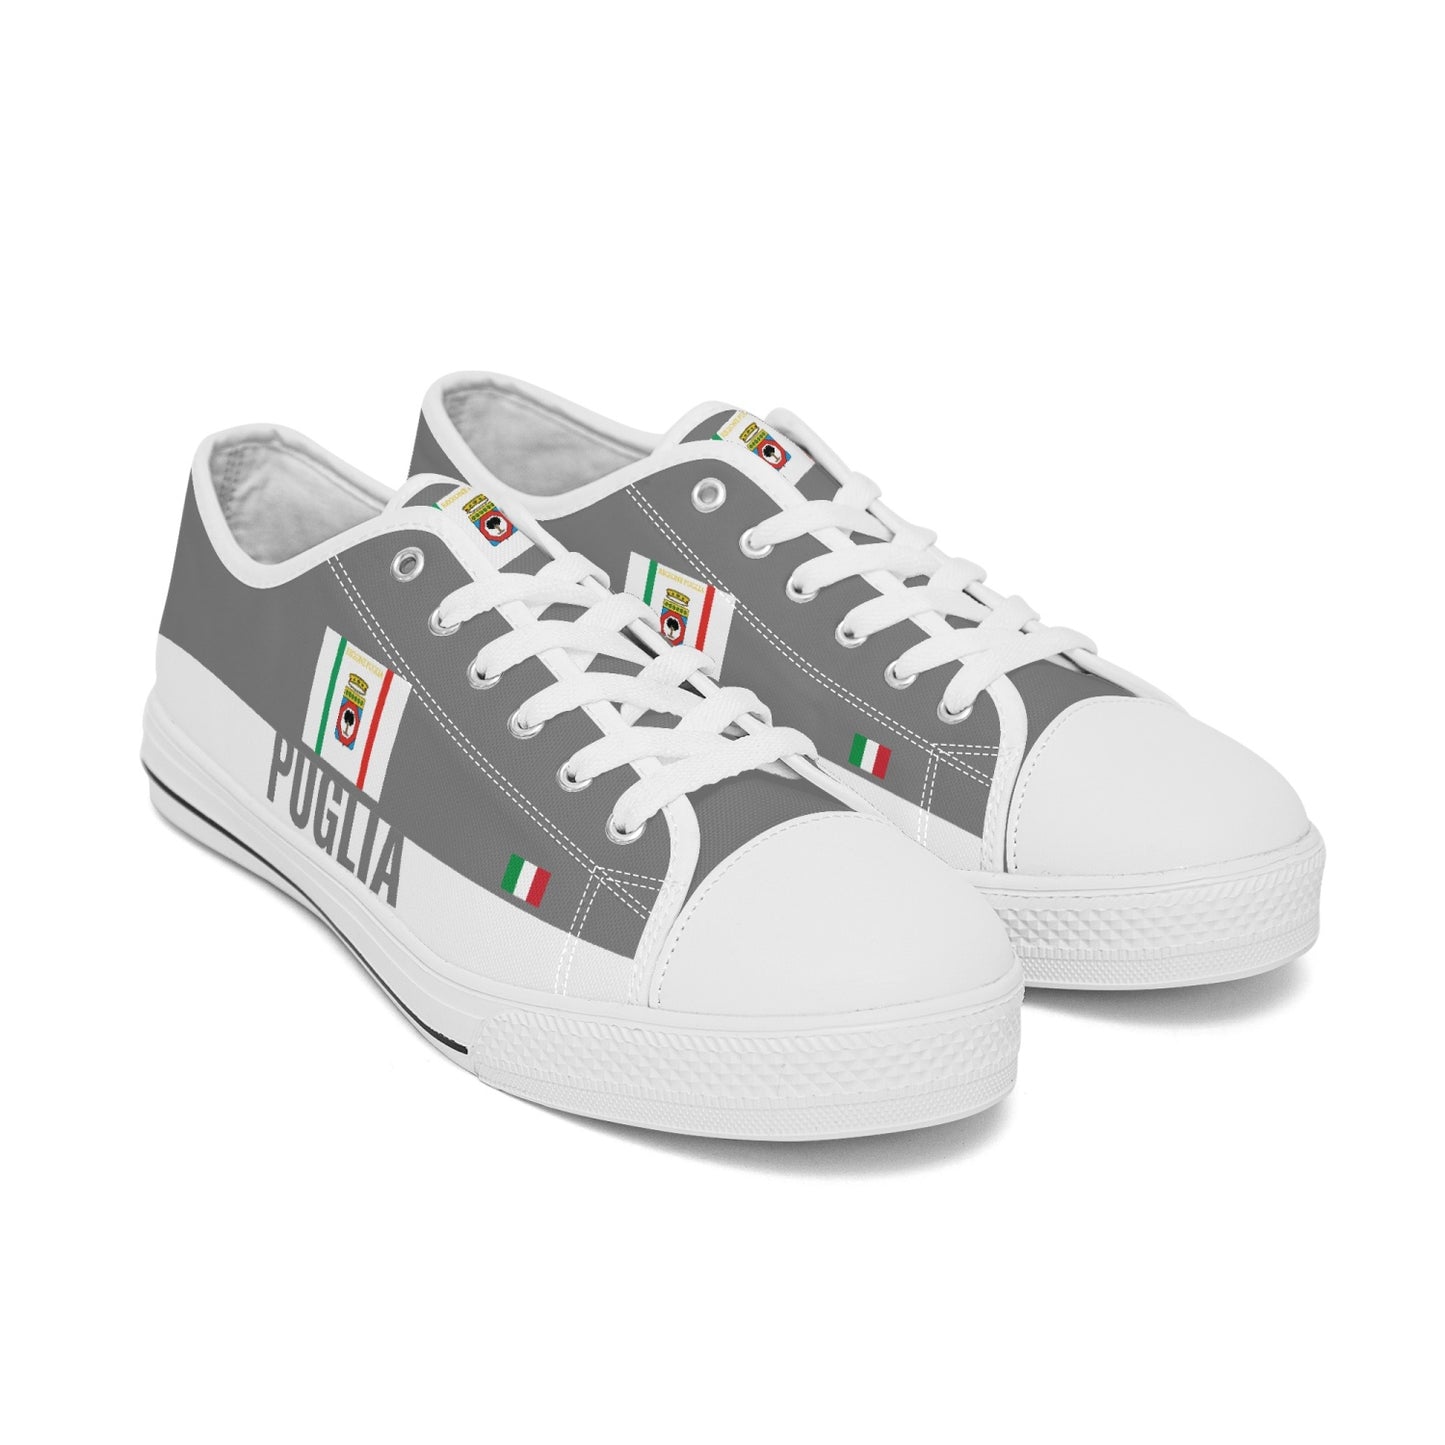 Puglia Shoes Low-top V2